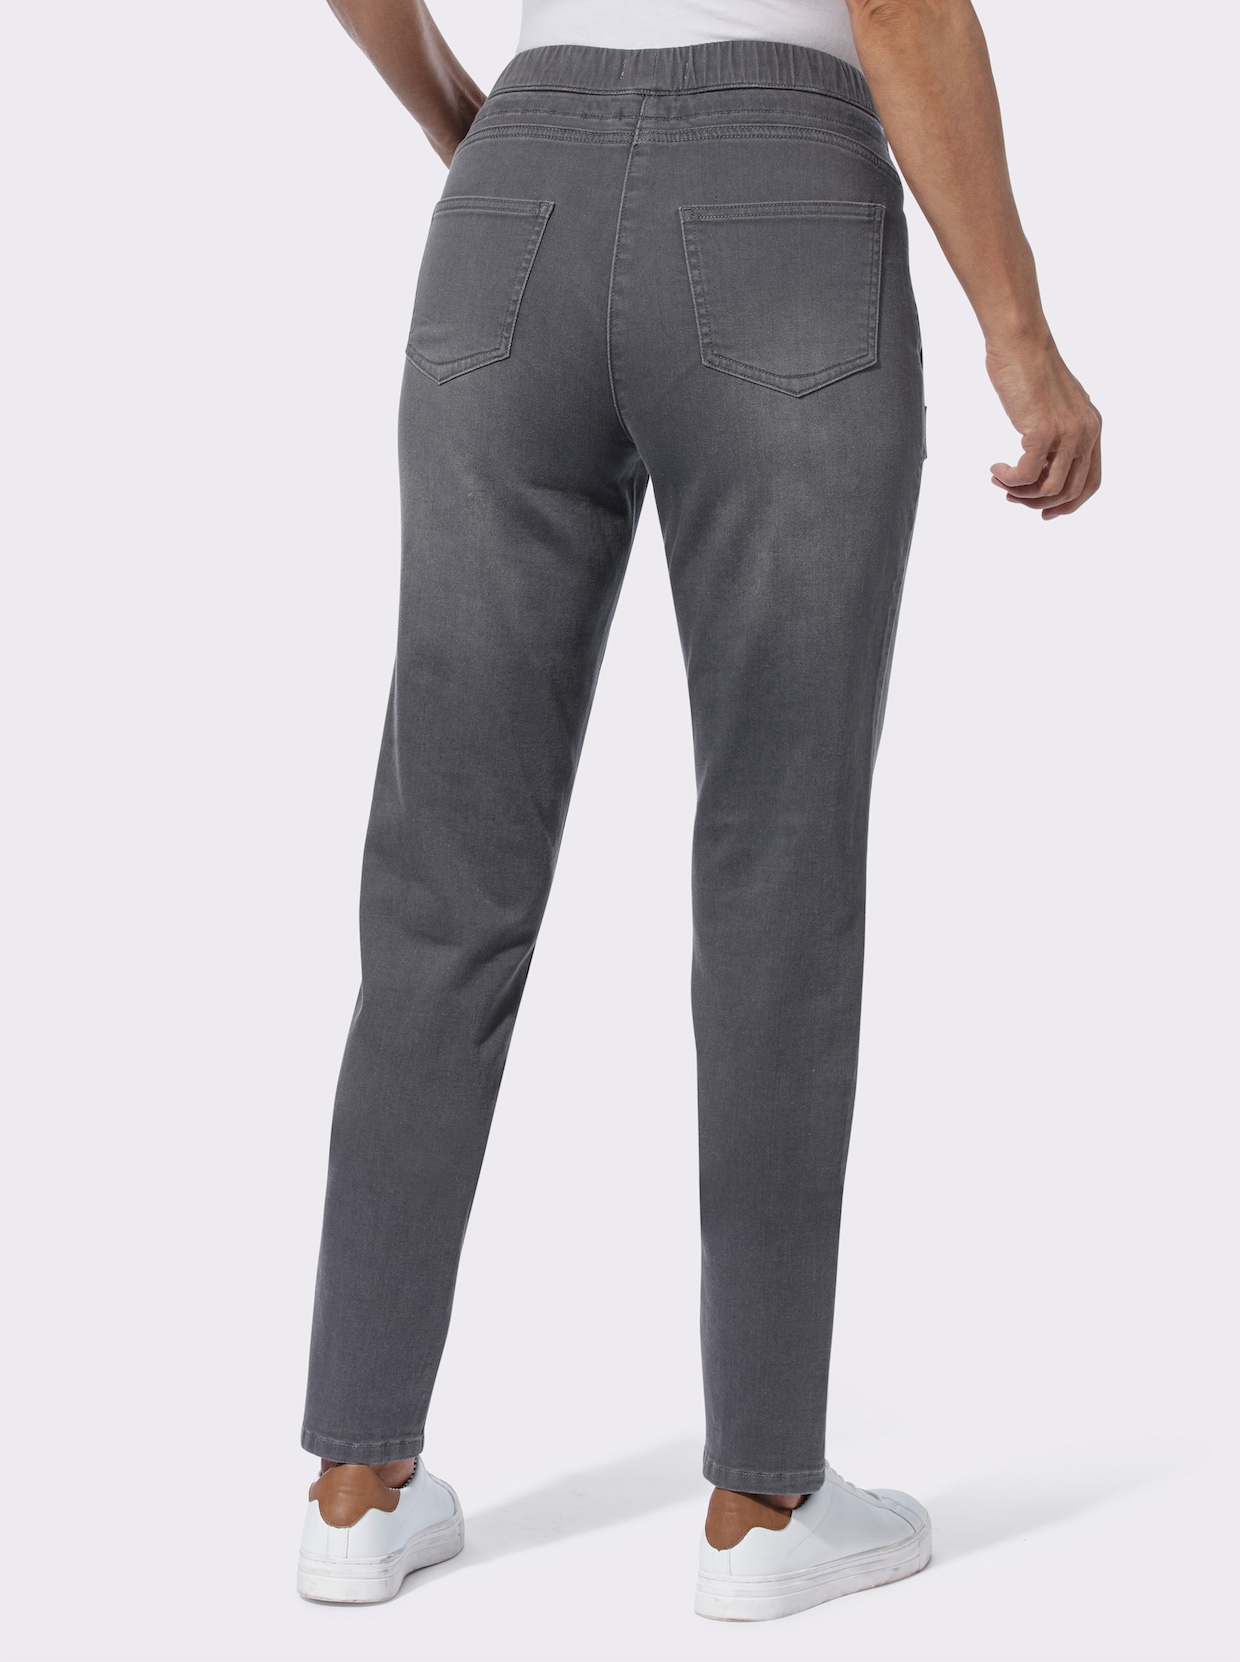 Jeans - grey-denim